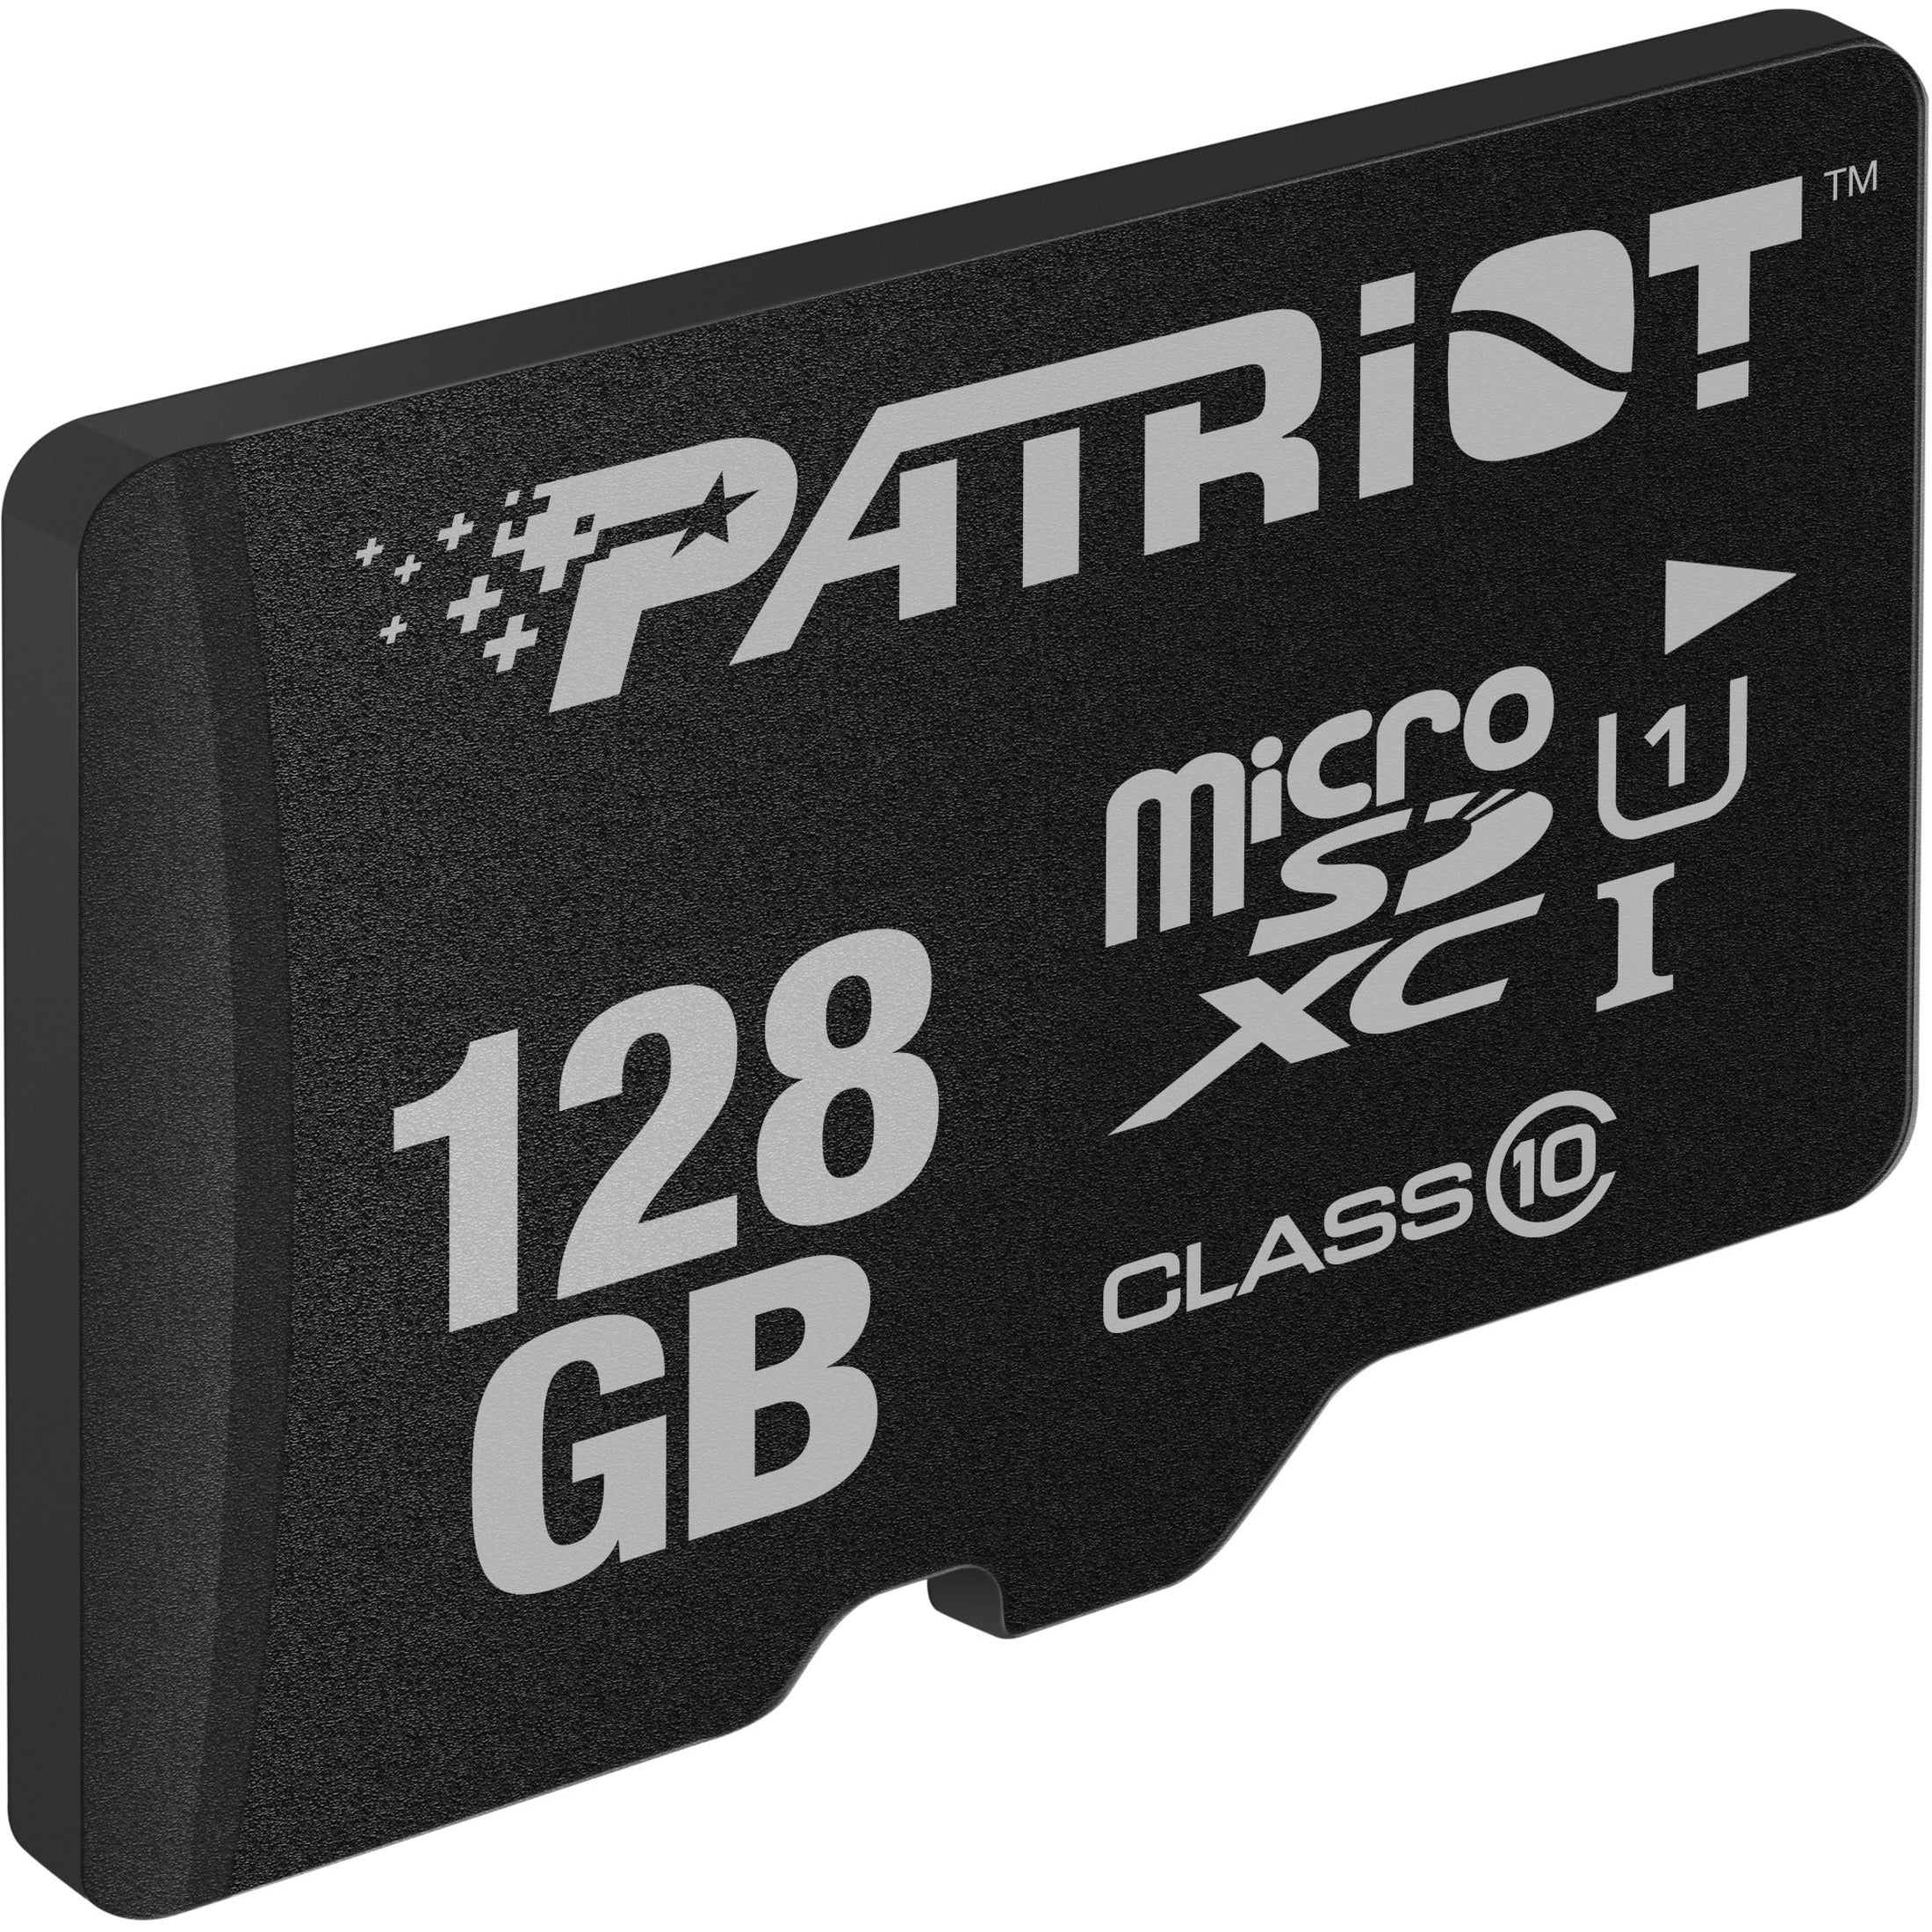 Patriot Memory PSF128GMDC10 LX 128GB microSDXC Card, 2 Year Limited Warranty, Class 10/UHS-I (U1), 80MB/s Read Speed